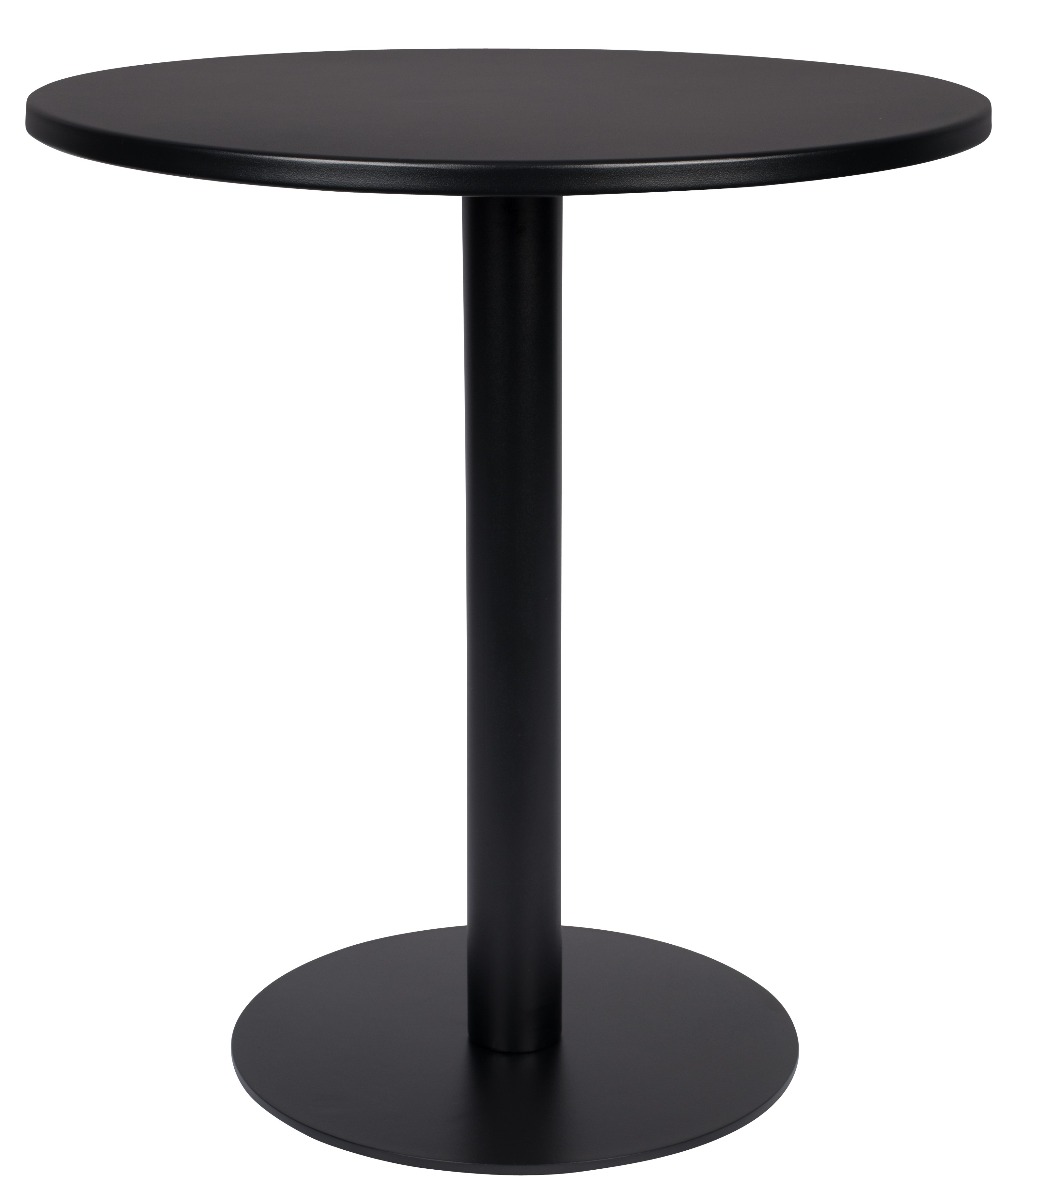 Metsu Bistro Table in Black